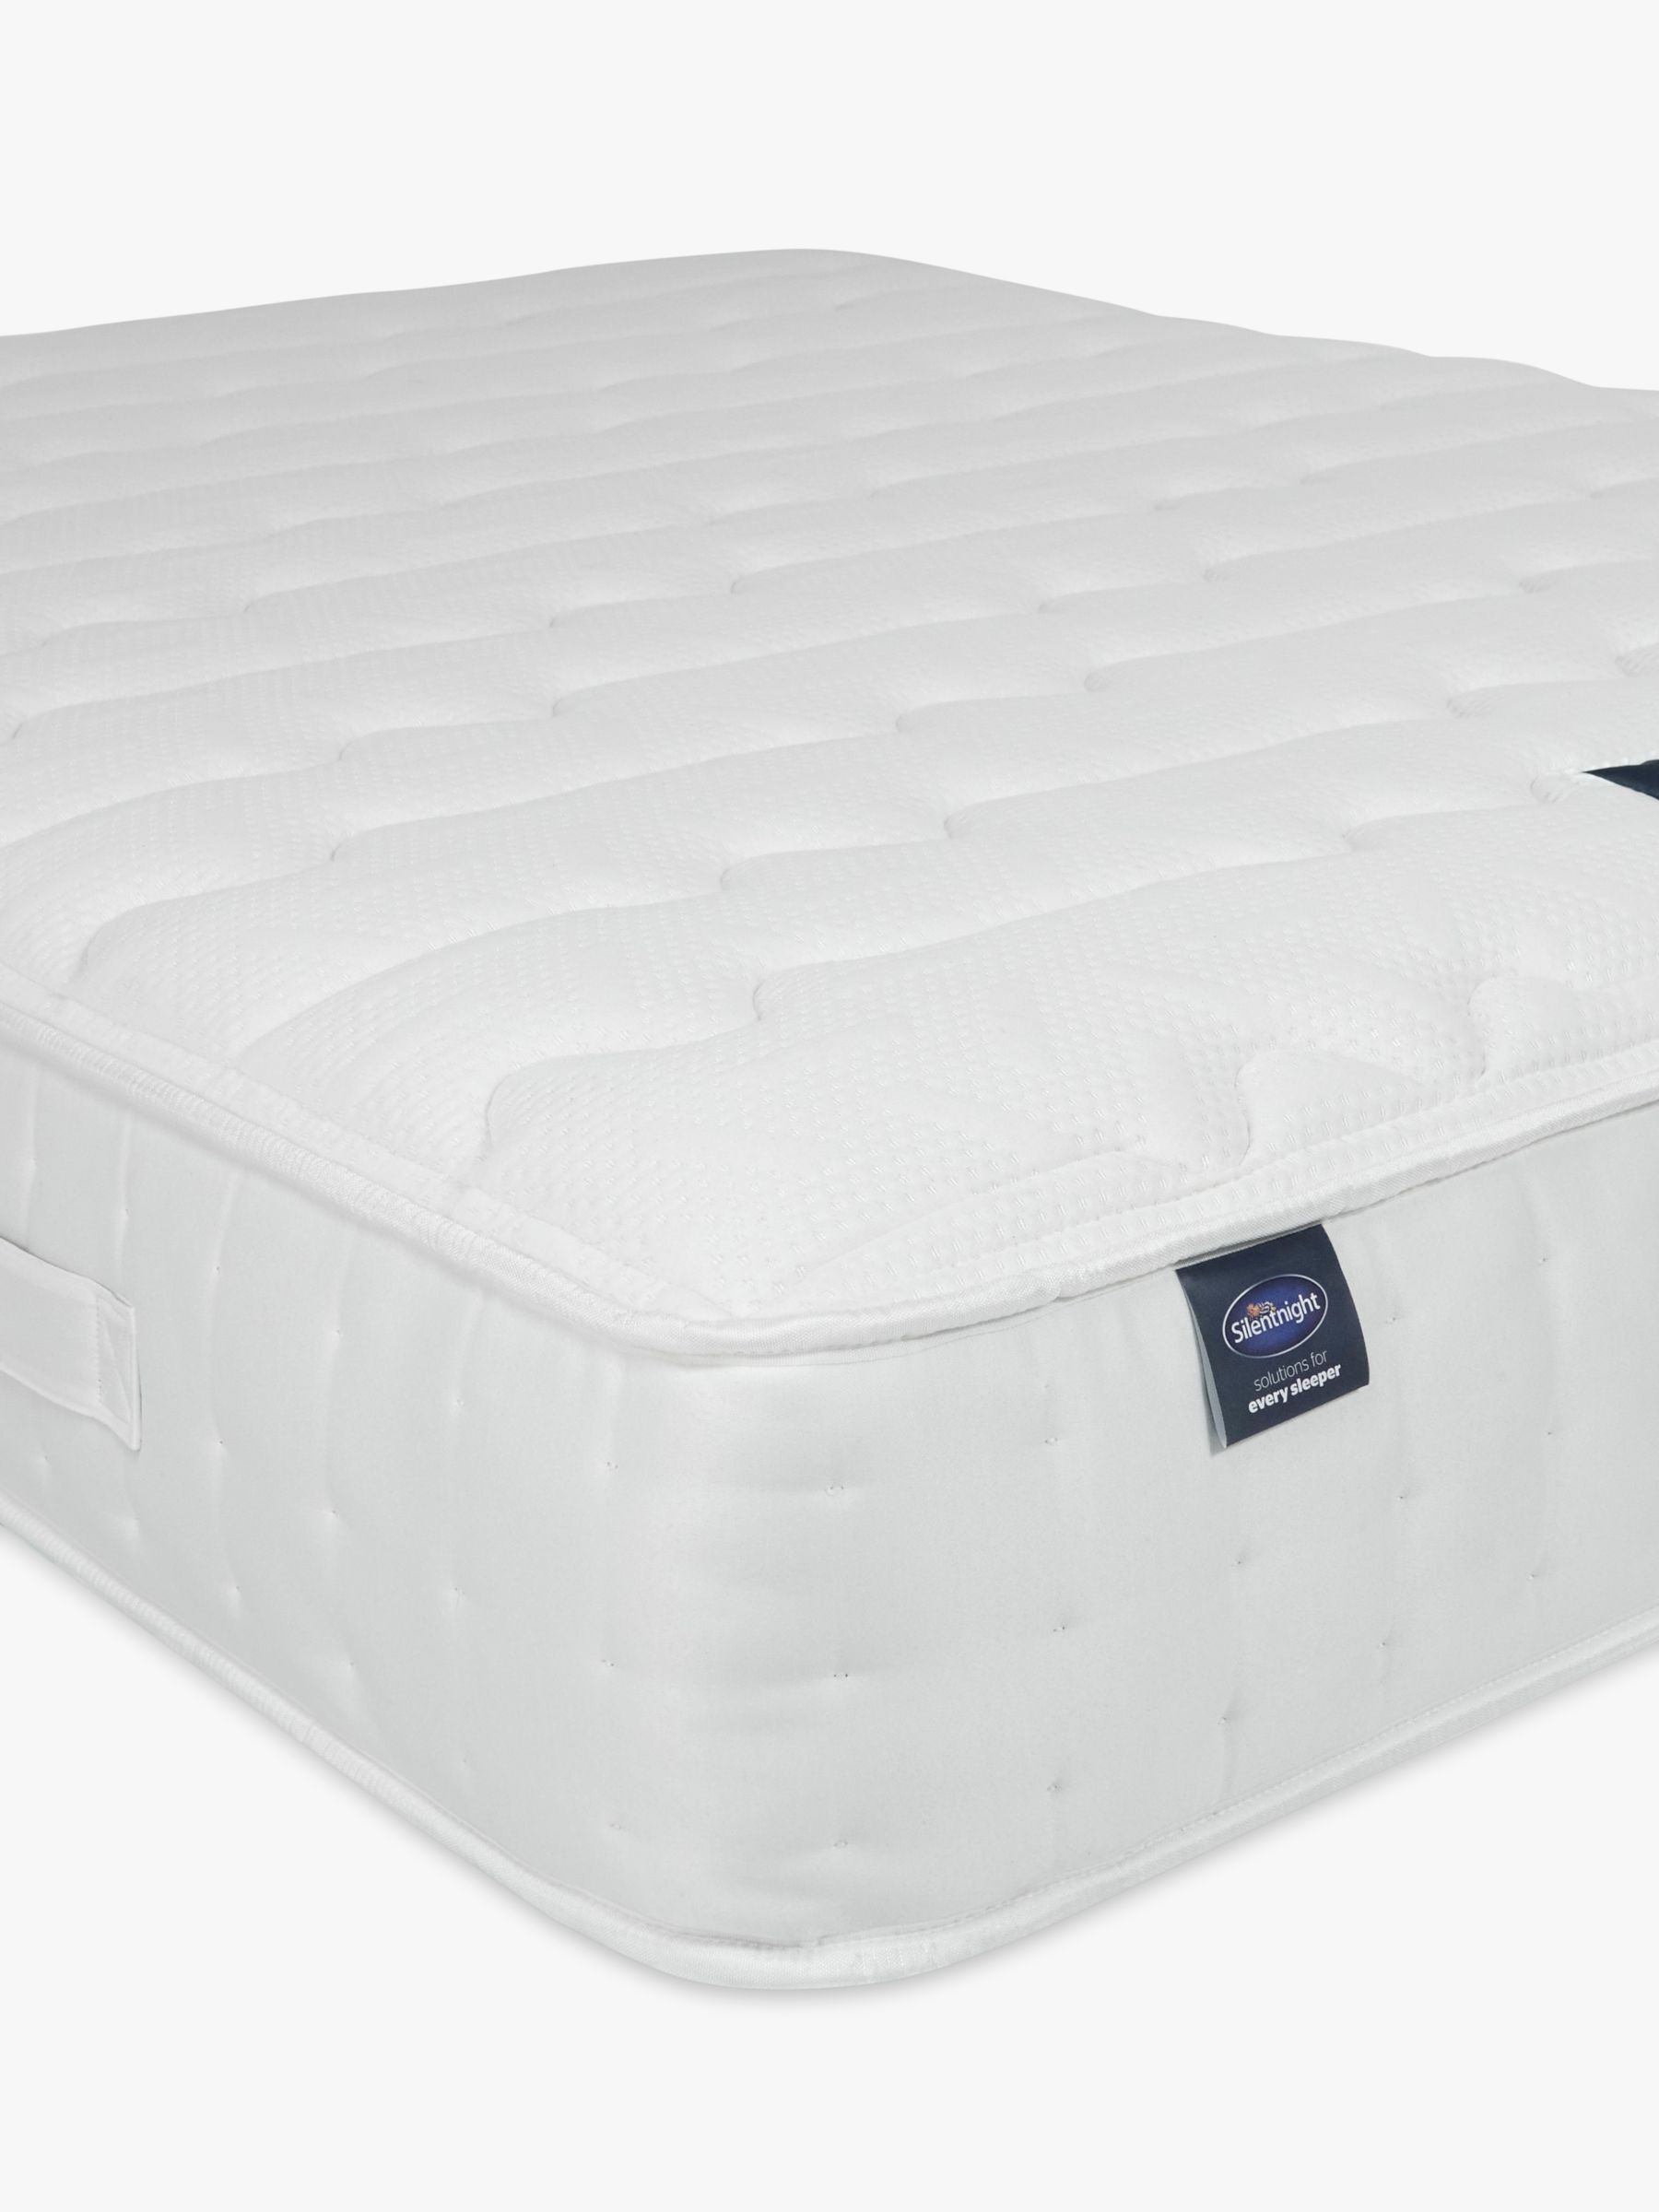 Photo of Silentnight revive eco comfort flex 1650 spring mattress regular tension super king size